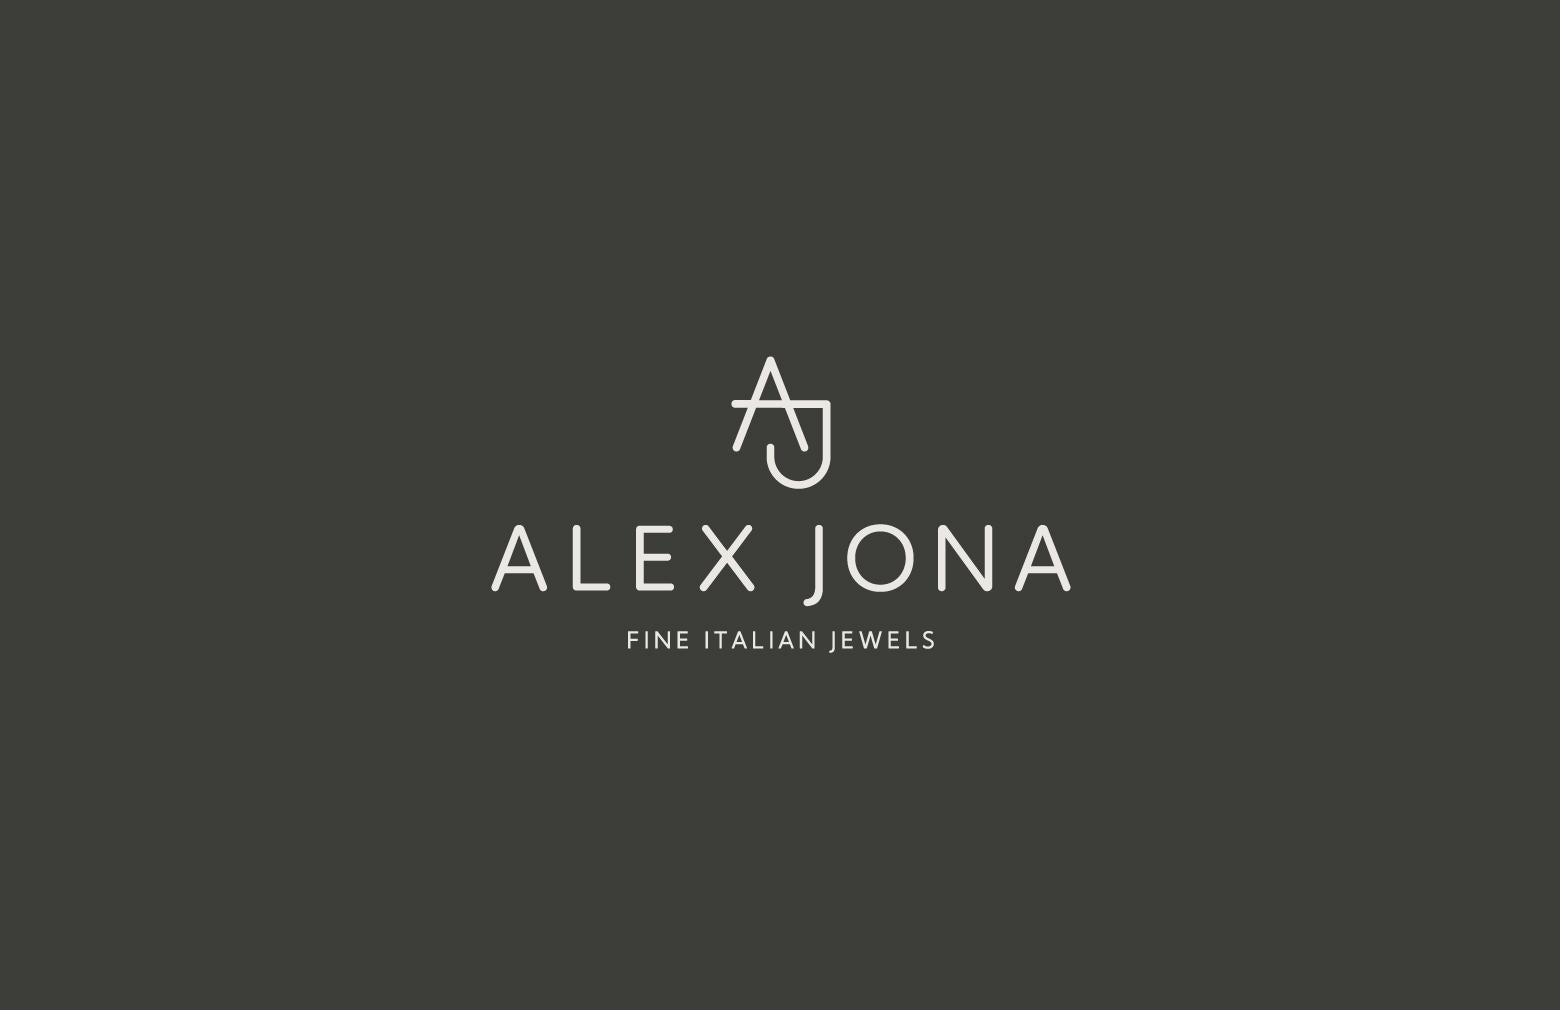 Alex Jona White Diamond 18 Karat Yellow Gold Pendant Earrings For Sale 5